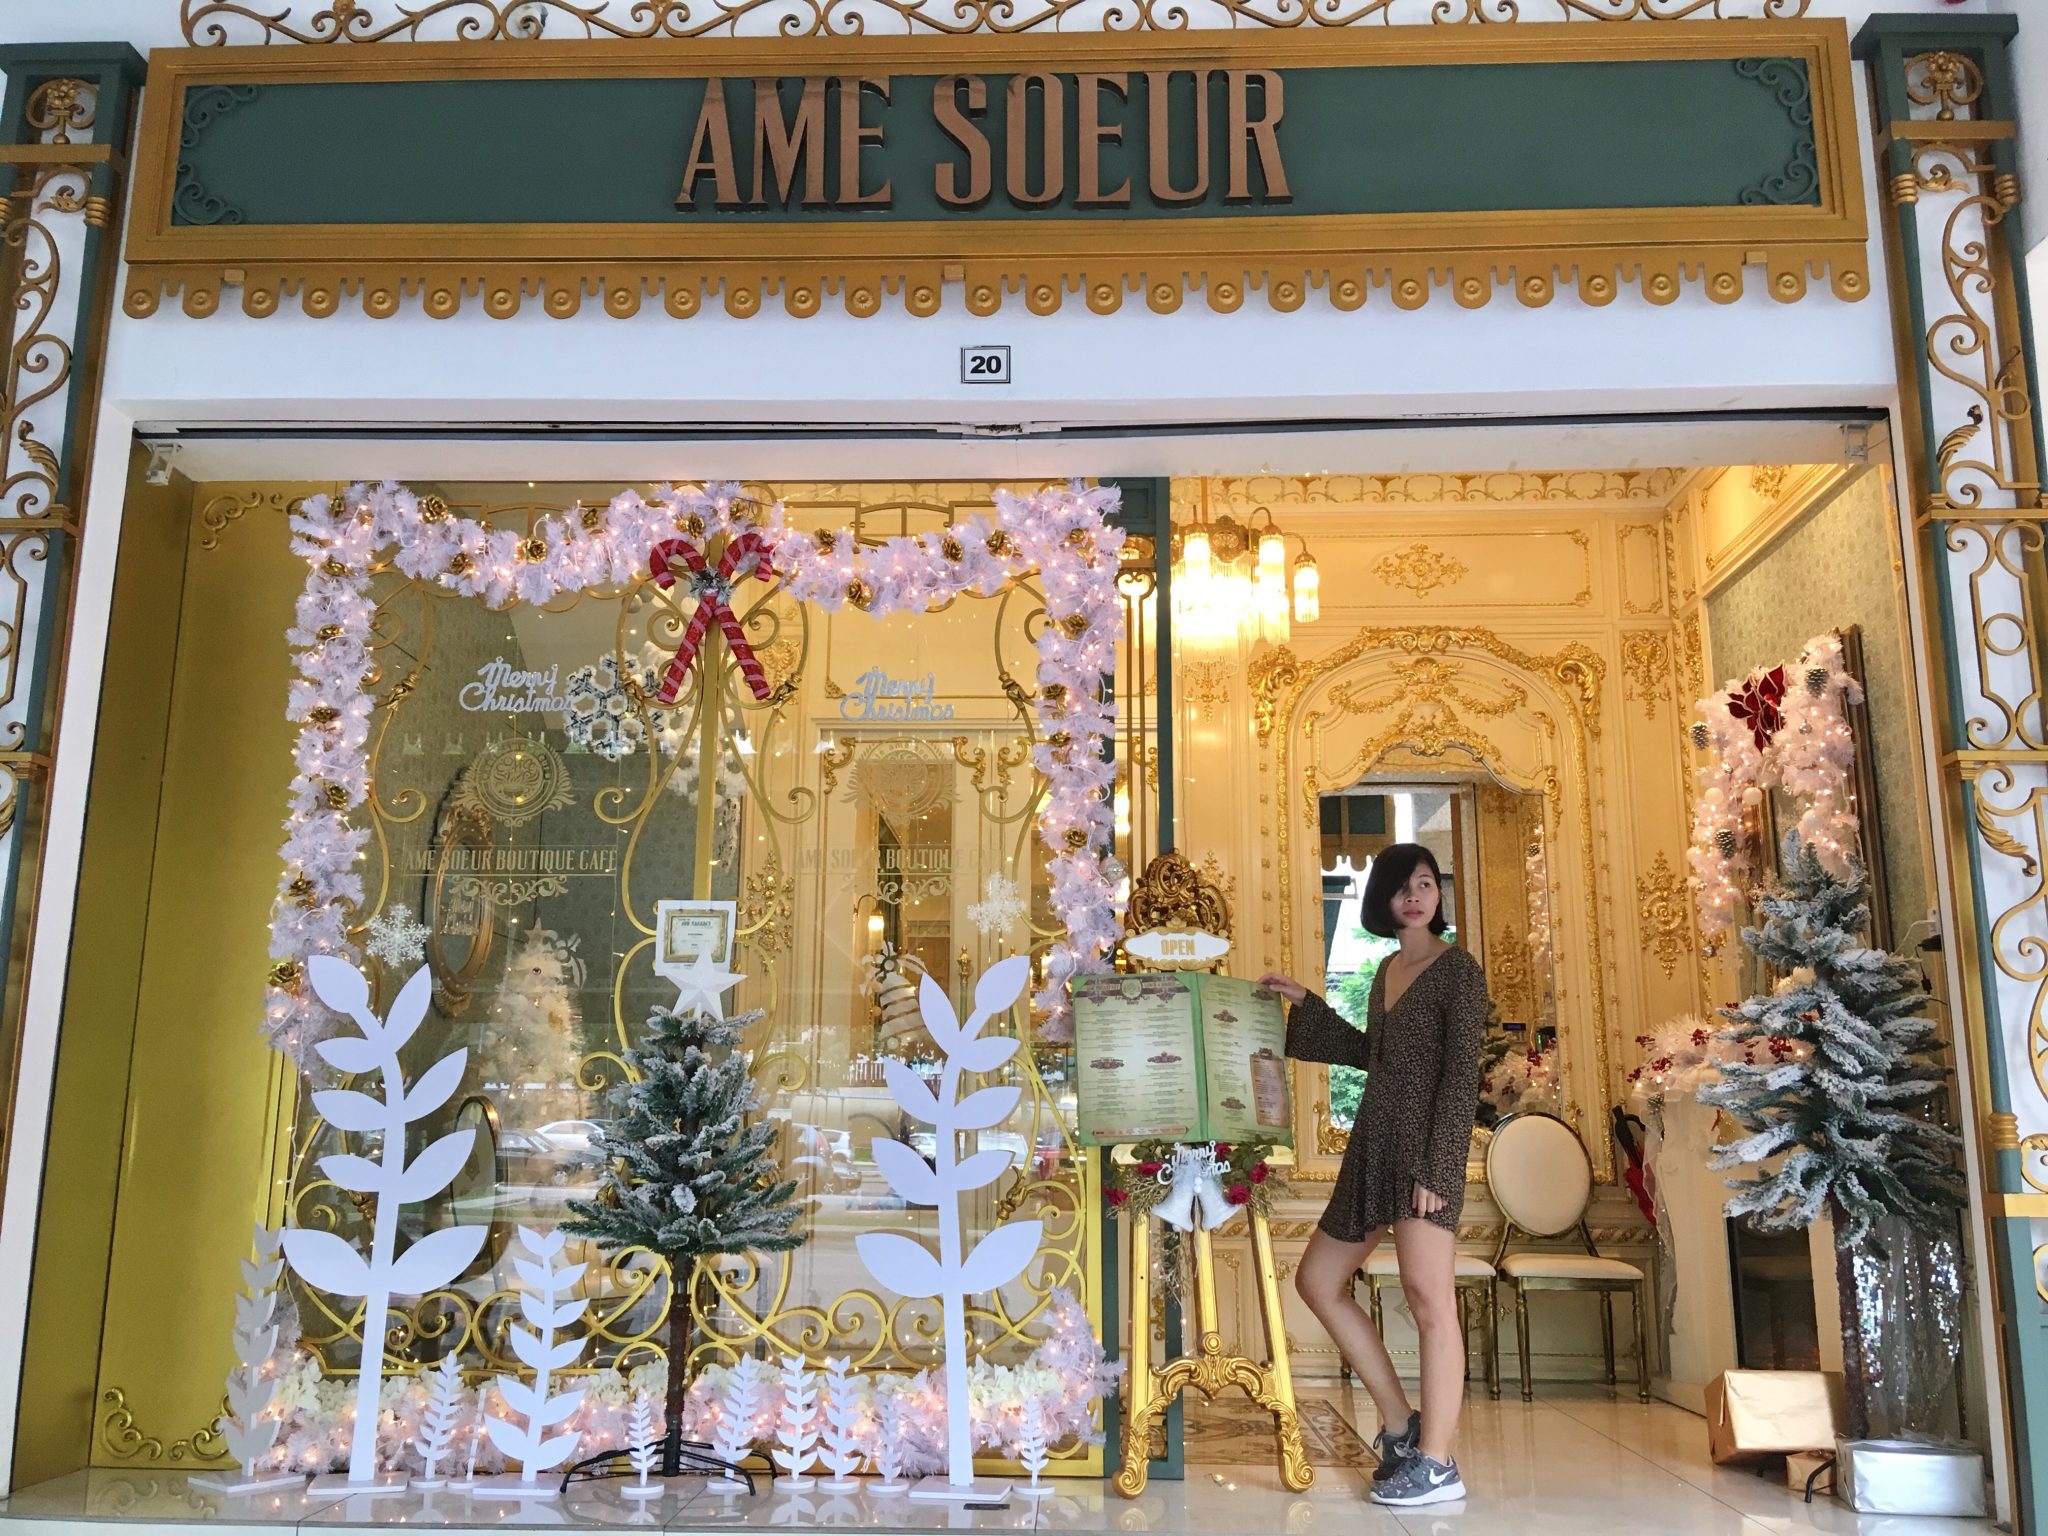 Cafe Ame Soeur: A Portal to a Romantic French Cafe @ Bukit Jalil Kuala Lumpur